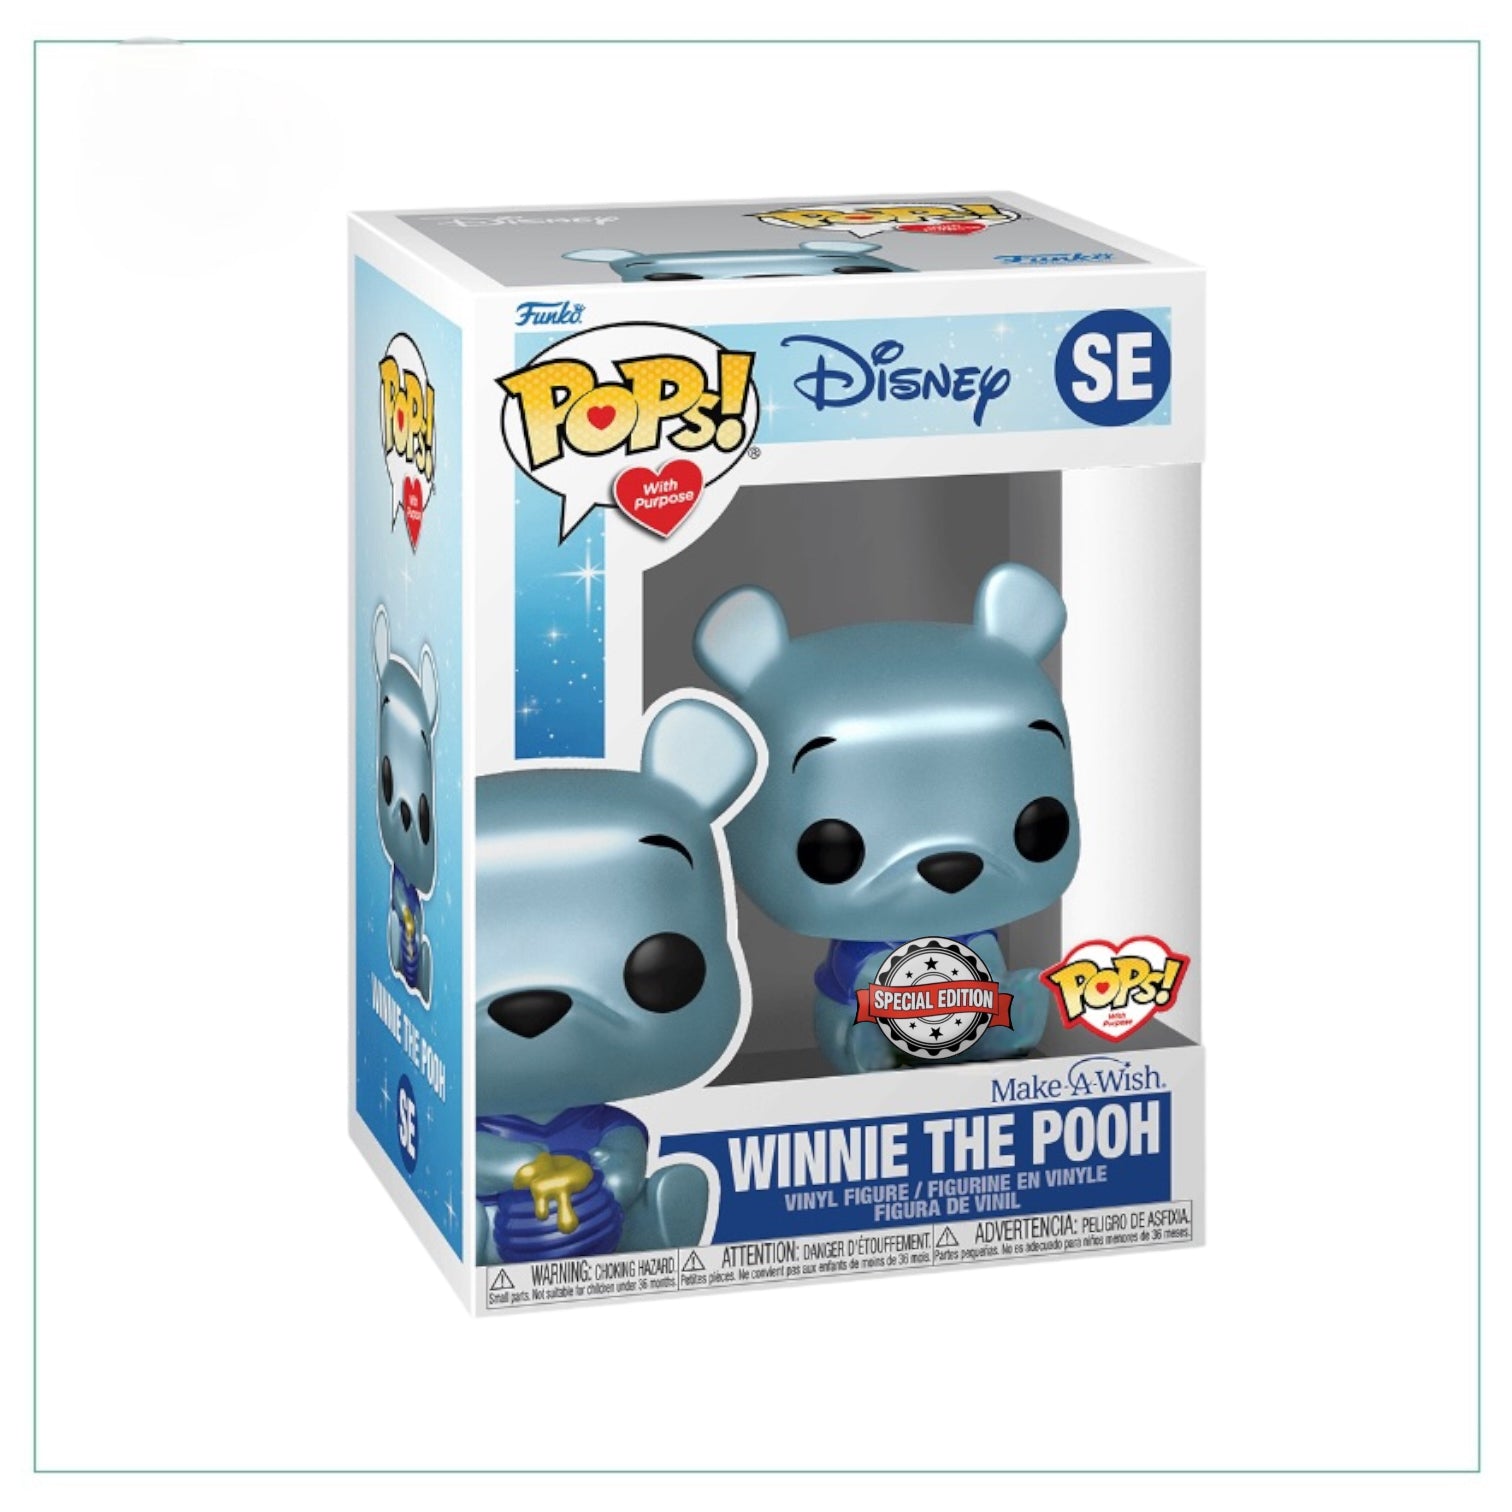 Winnie The Pooh #SE Funko Pop! - Make A Wish Disney - Special Edition